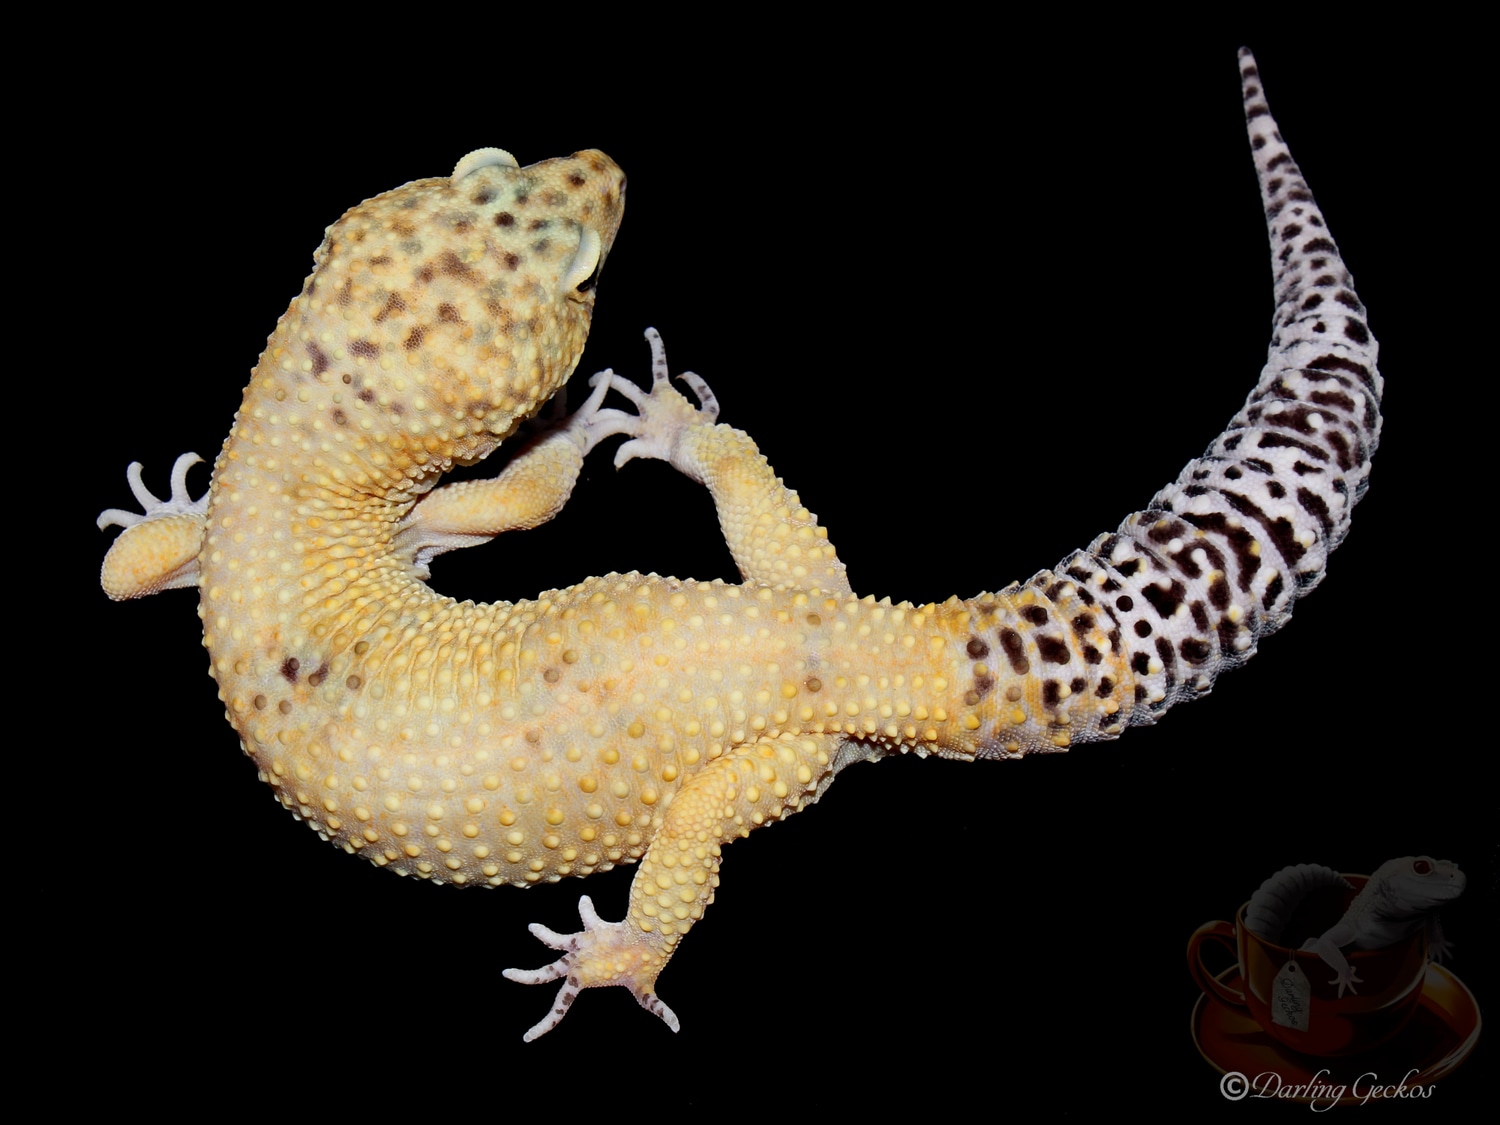 Atomic Afghan Cross No Hets Leopard Gecko by Darling Geckos